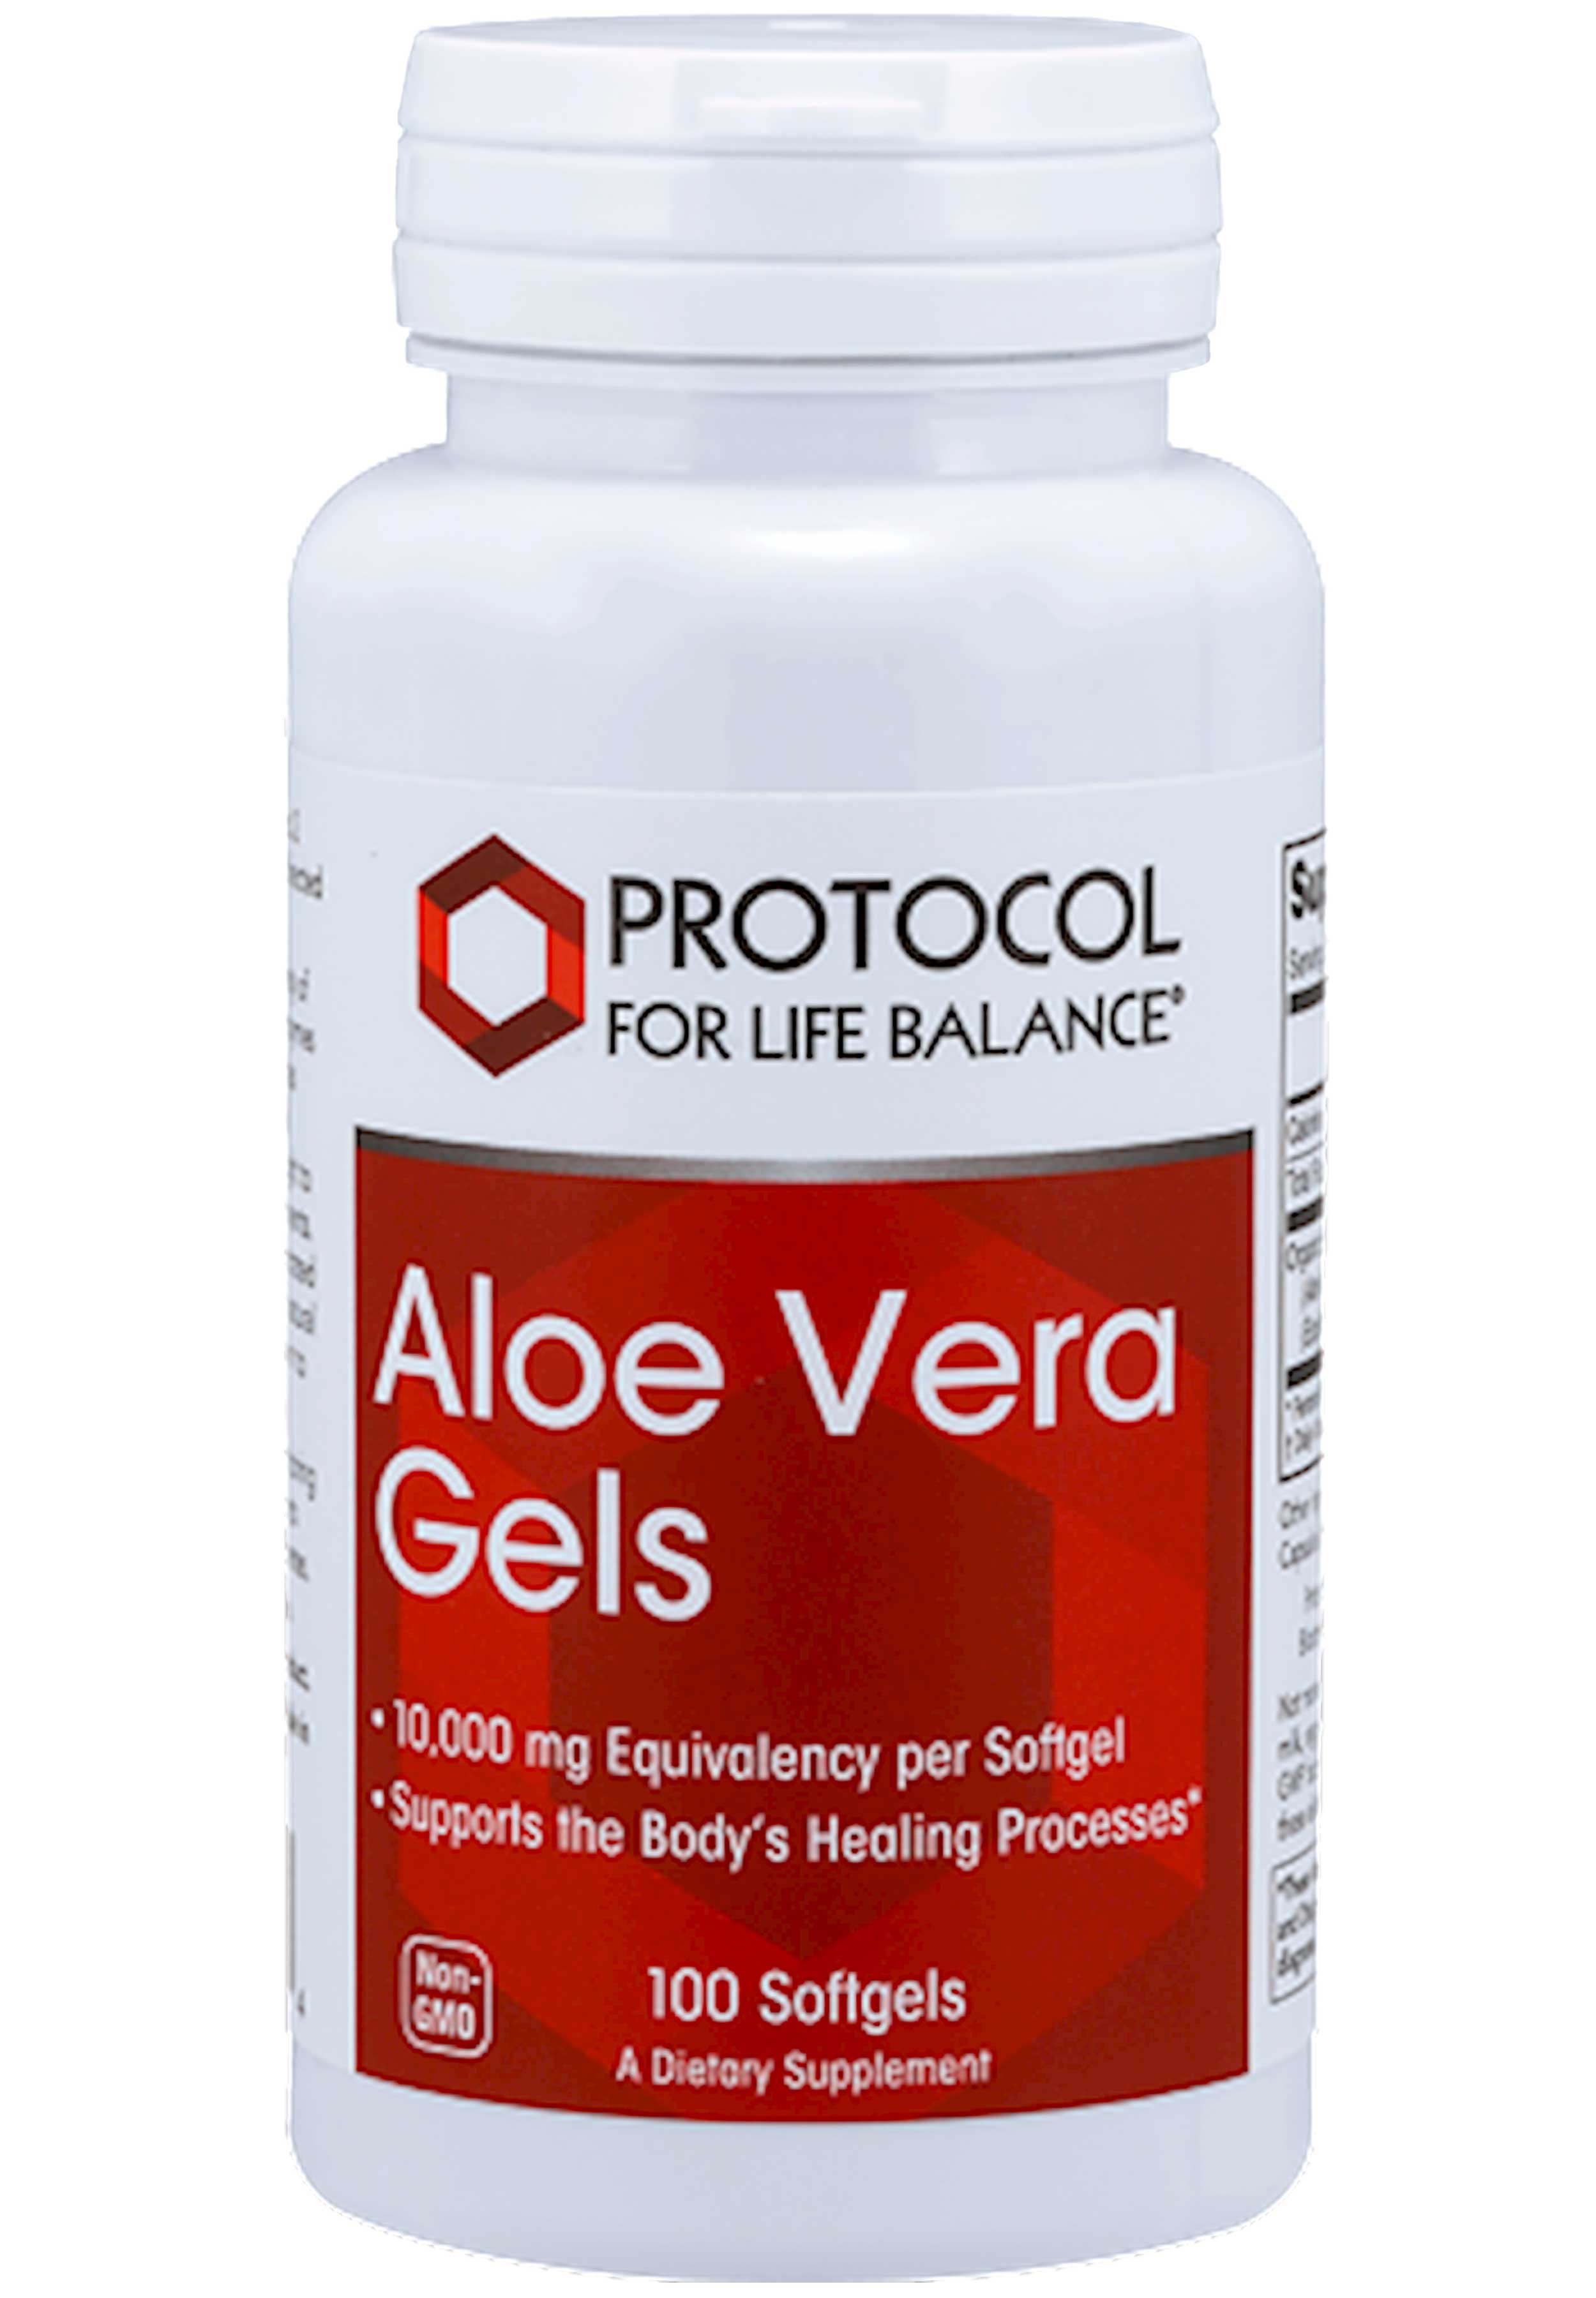 Protocol for Life Balance Aloe Vera Gels